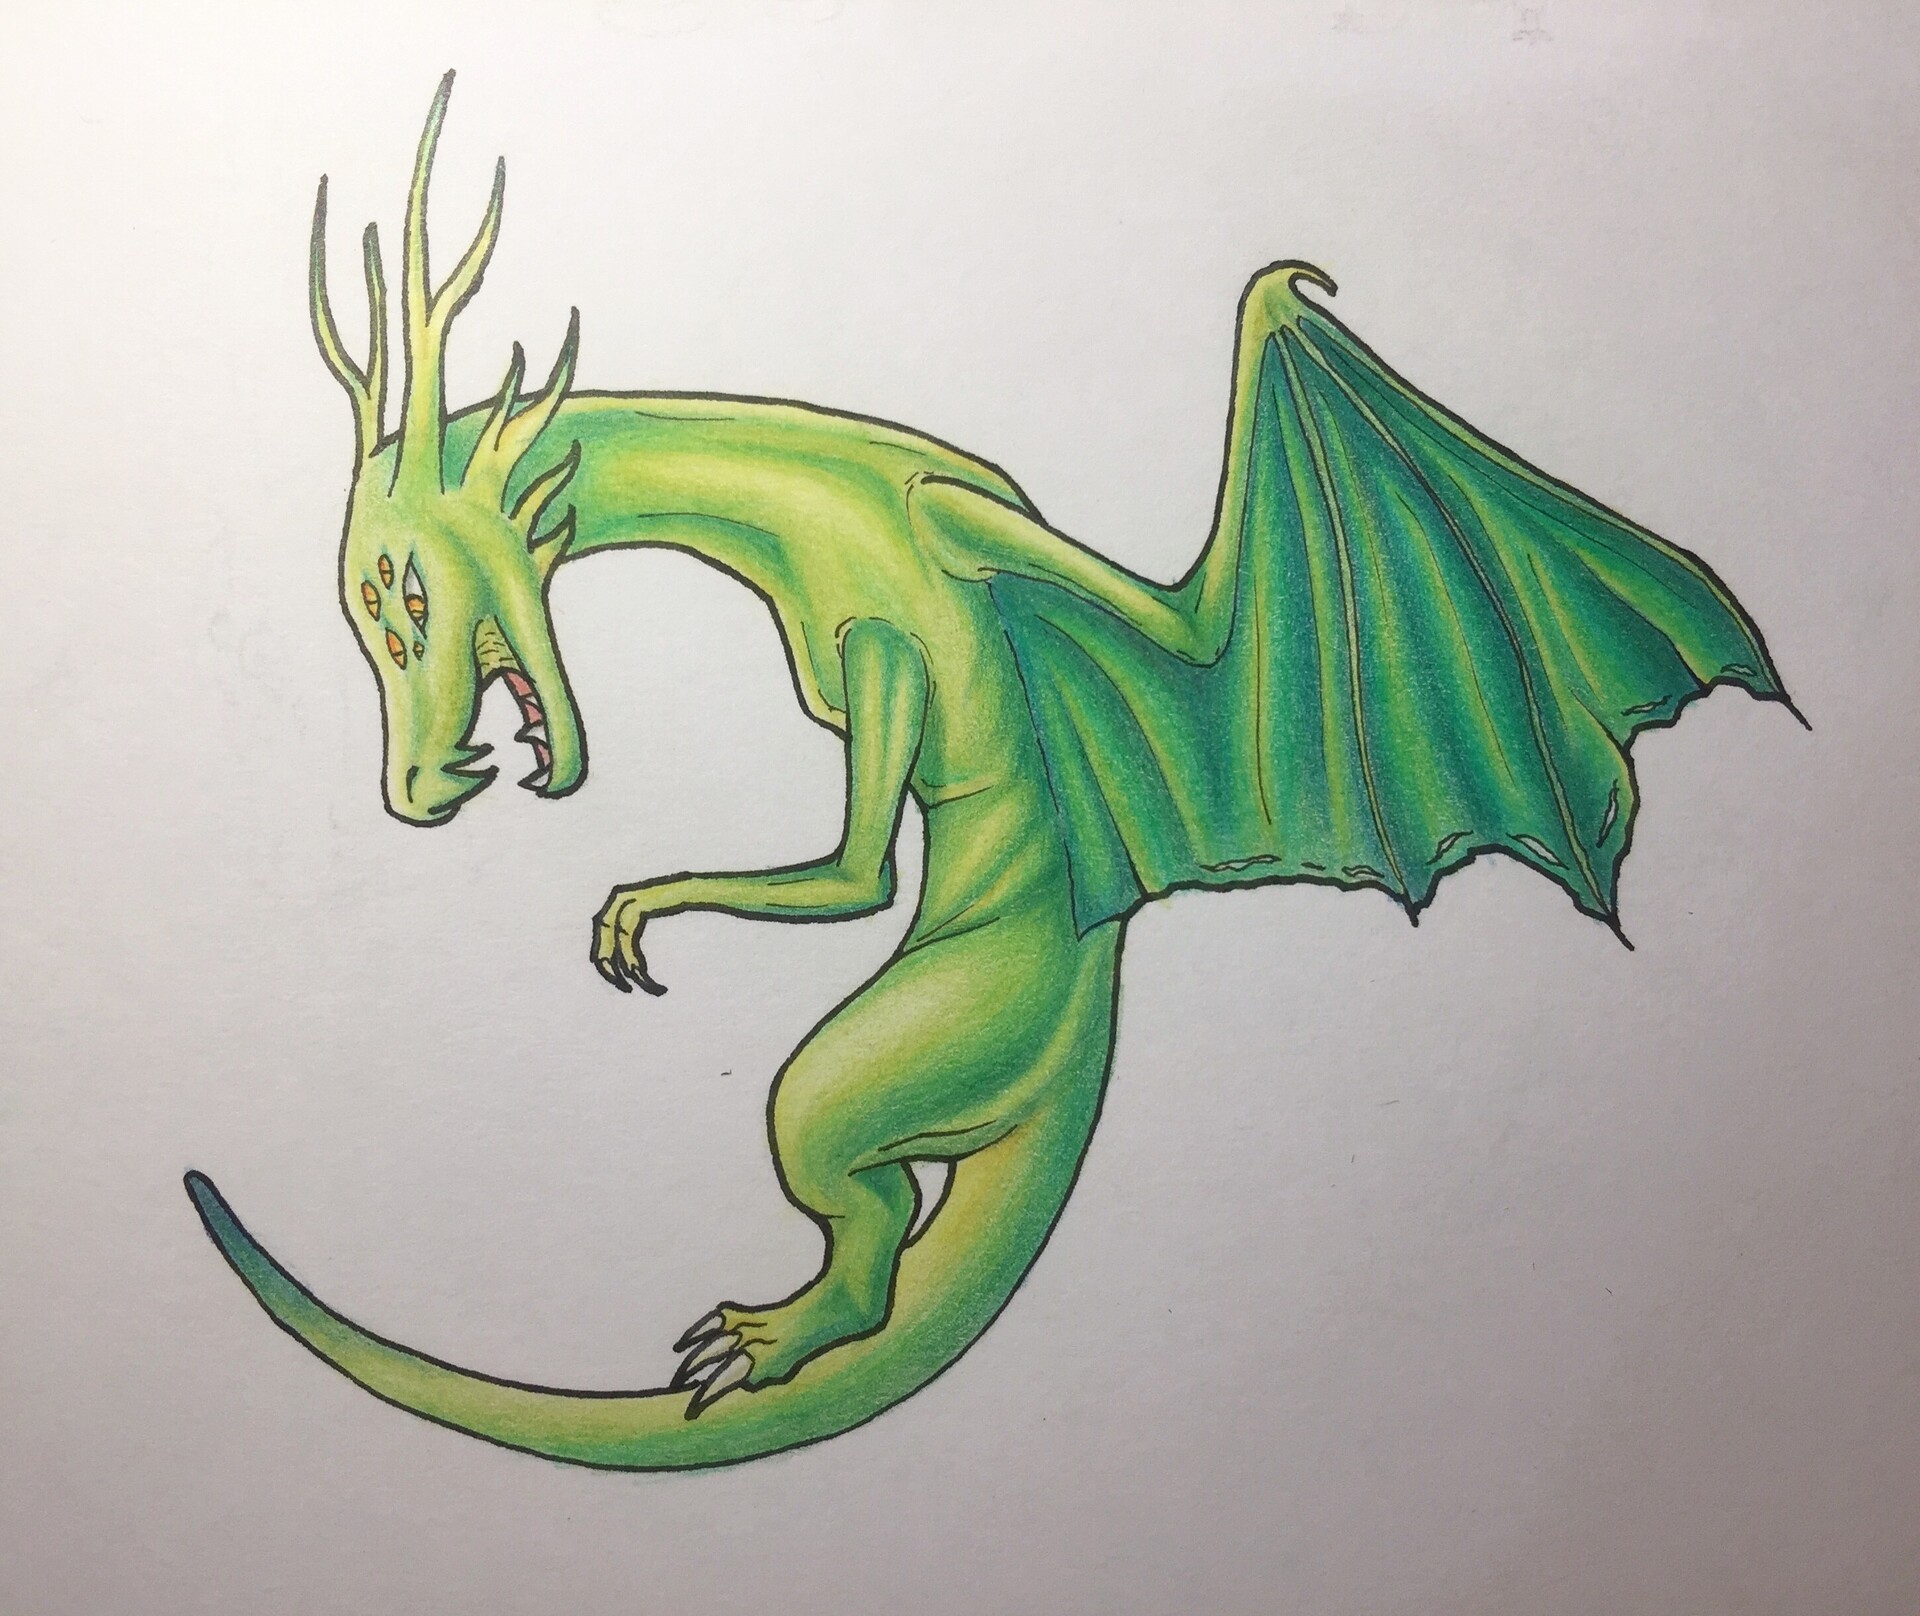 The green eyed dragon